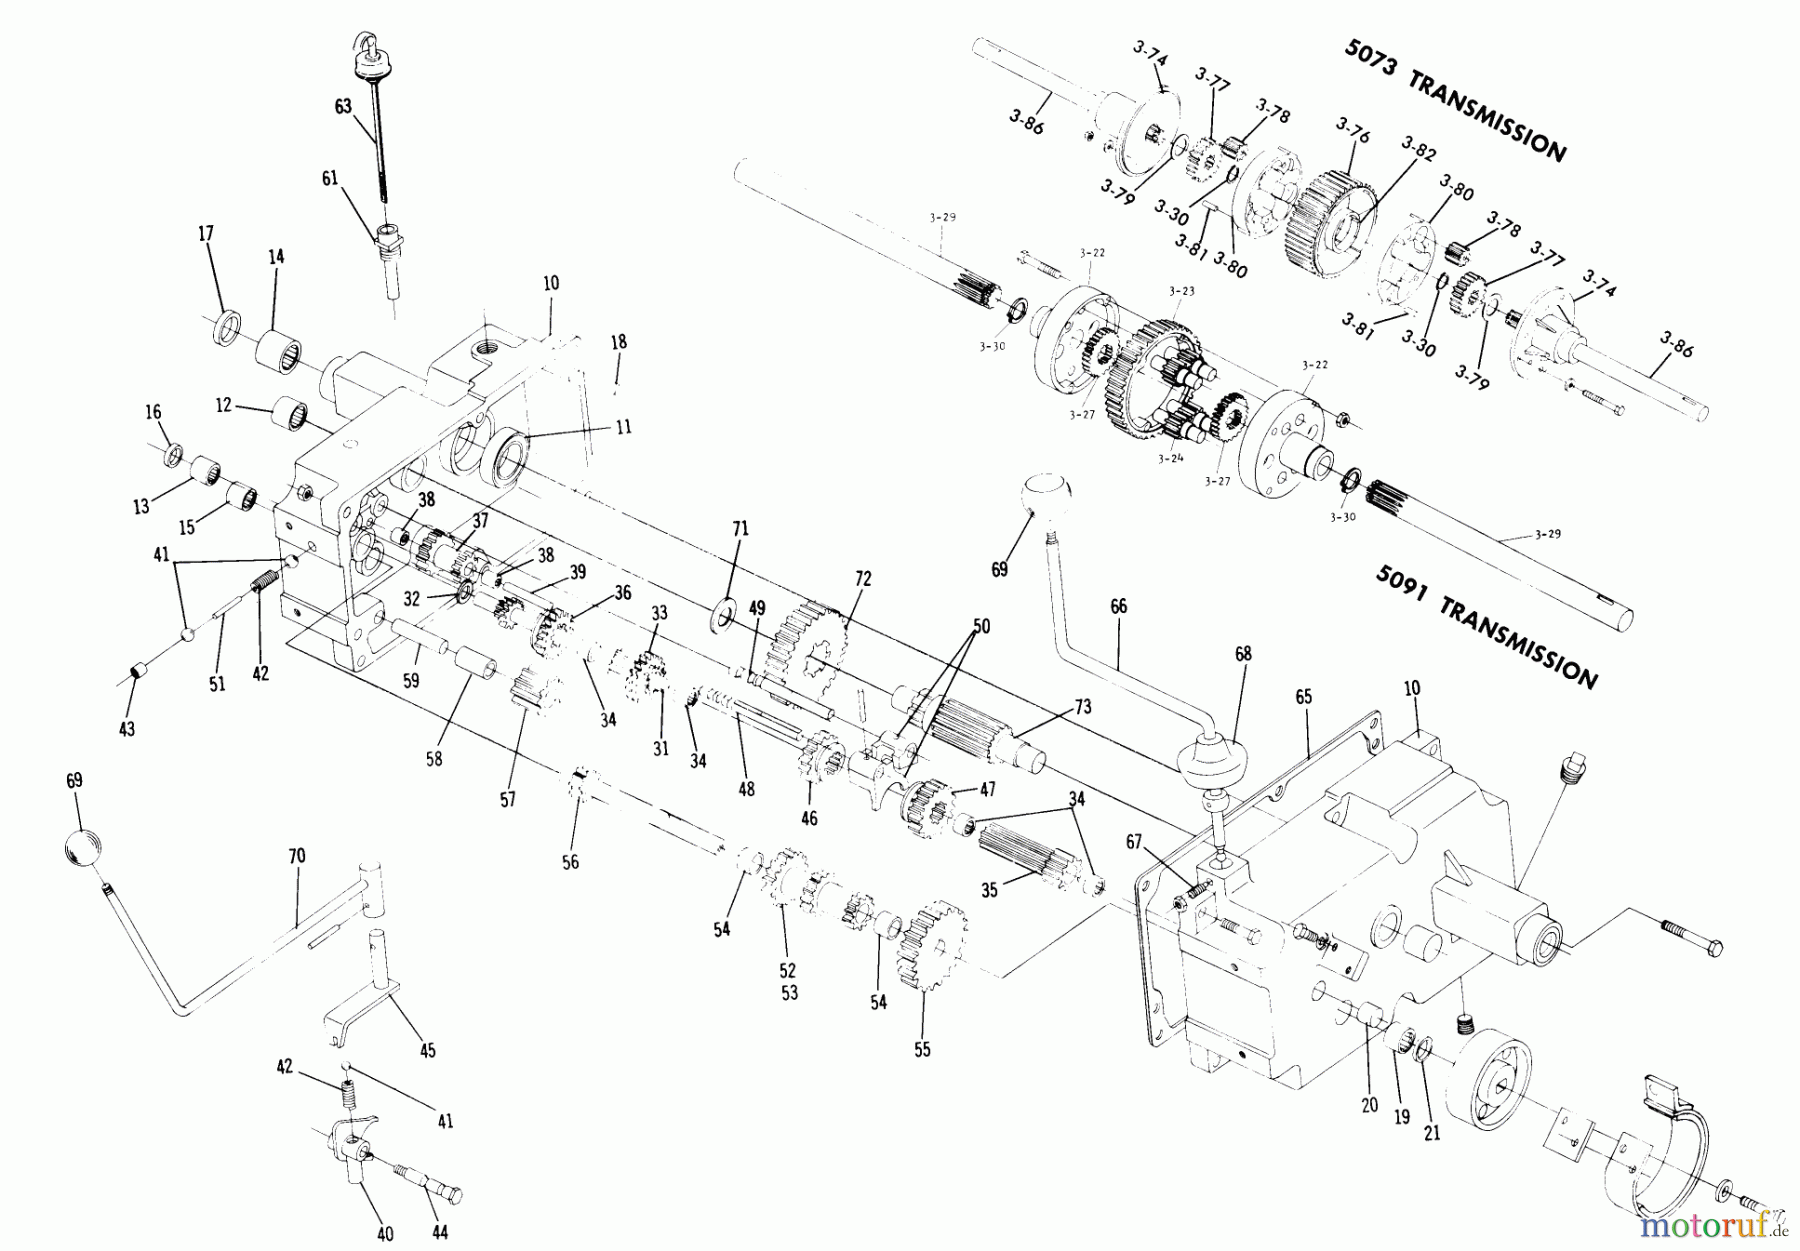  Toro Neu Mowers, Lawn & Garden Tractor Seite 1 1-0356 (C-120) - Toro C-120 8-Speed Tractor, 1974 TRANSMISSION 8-SPEED